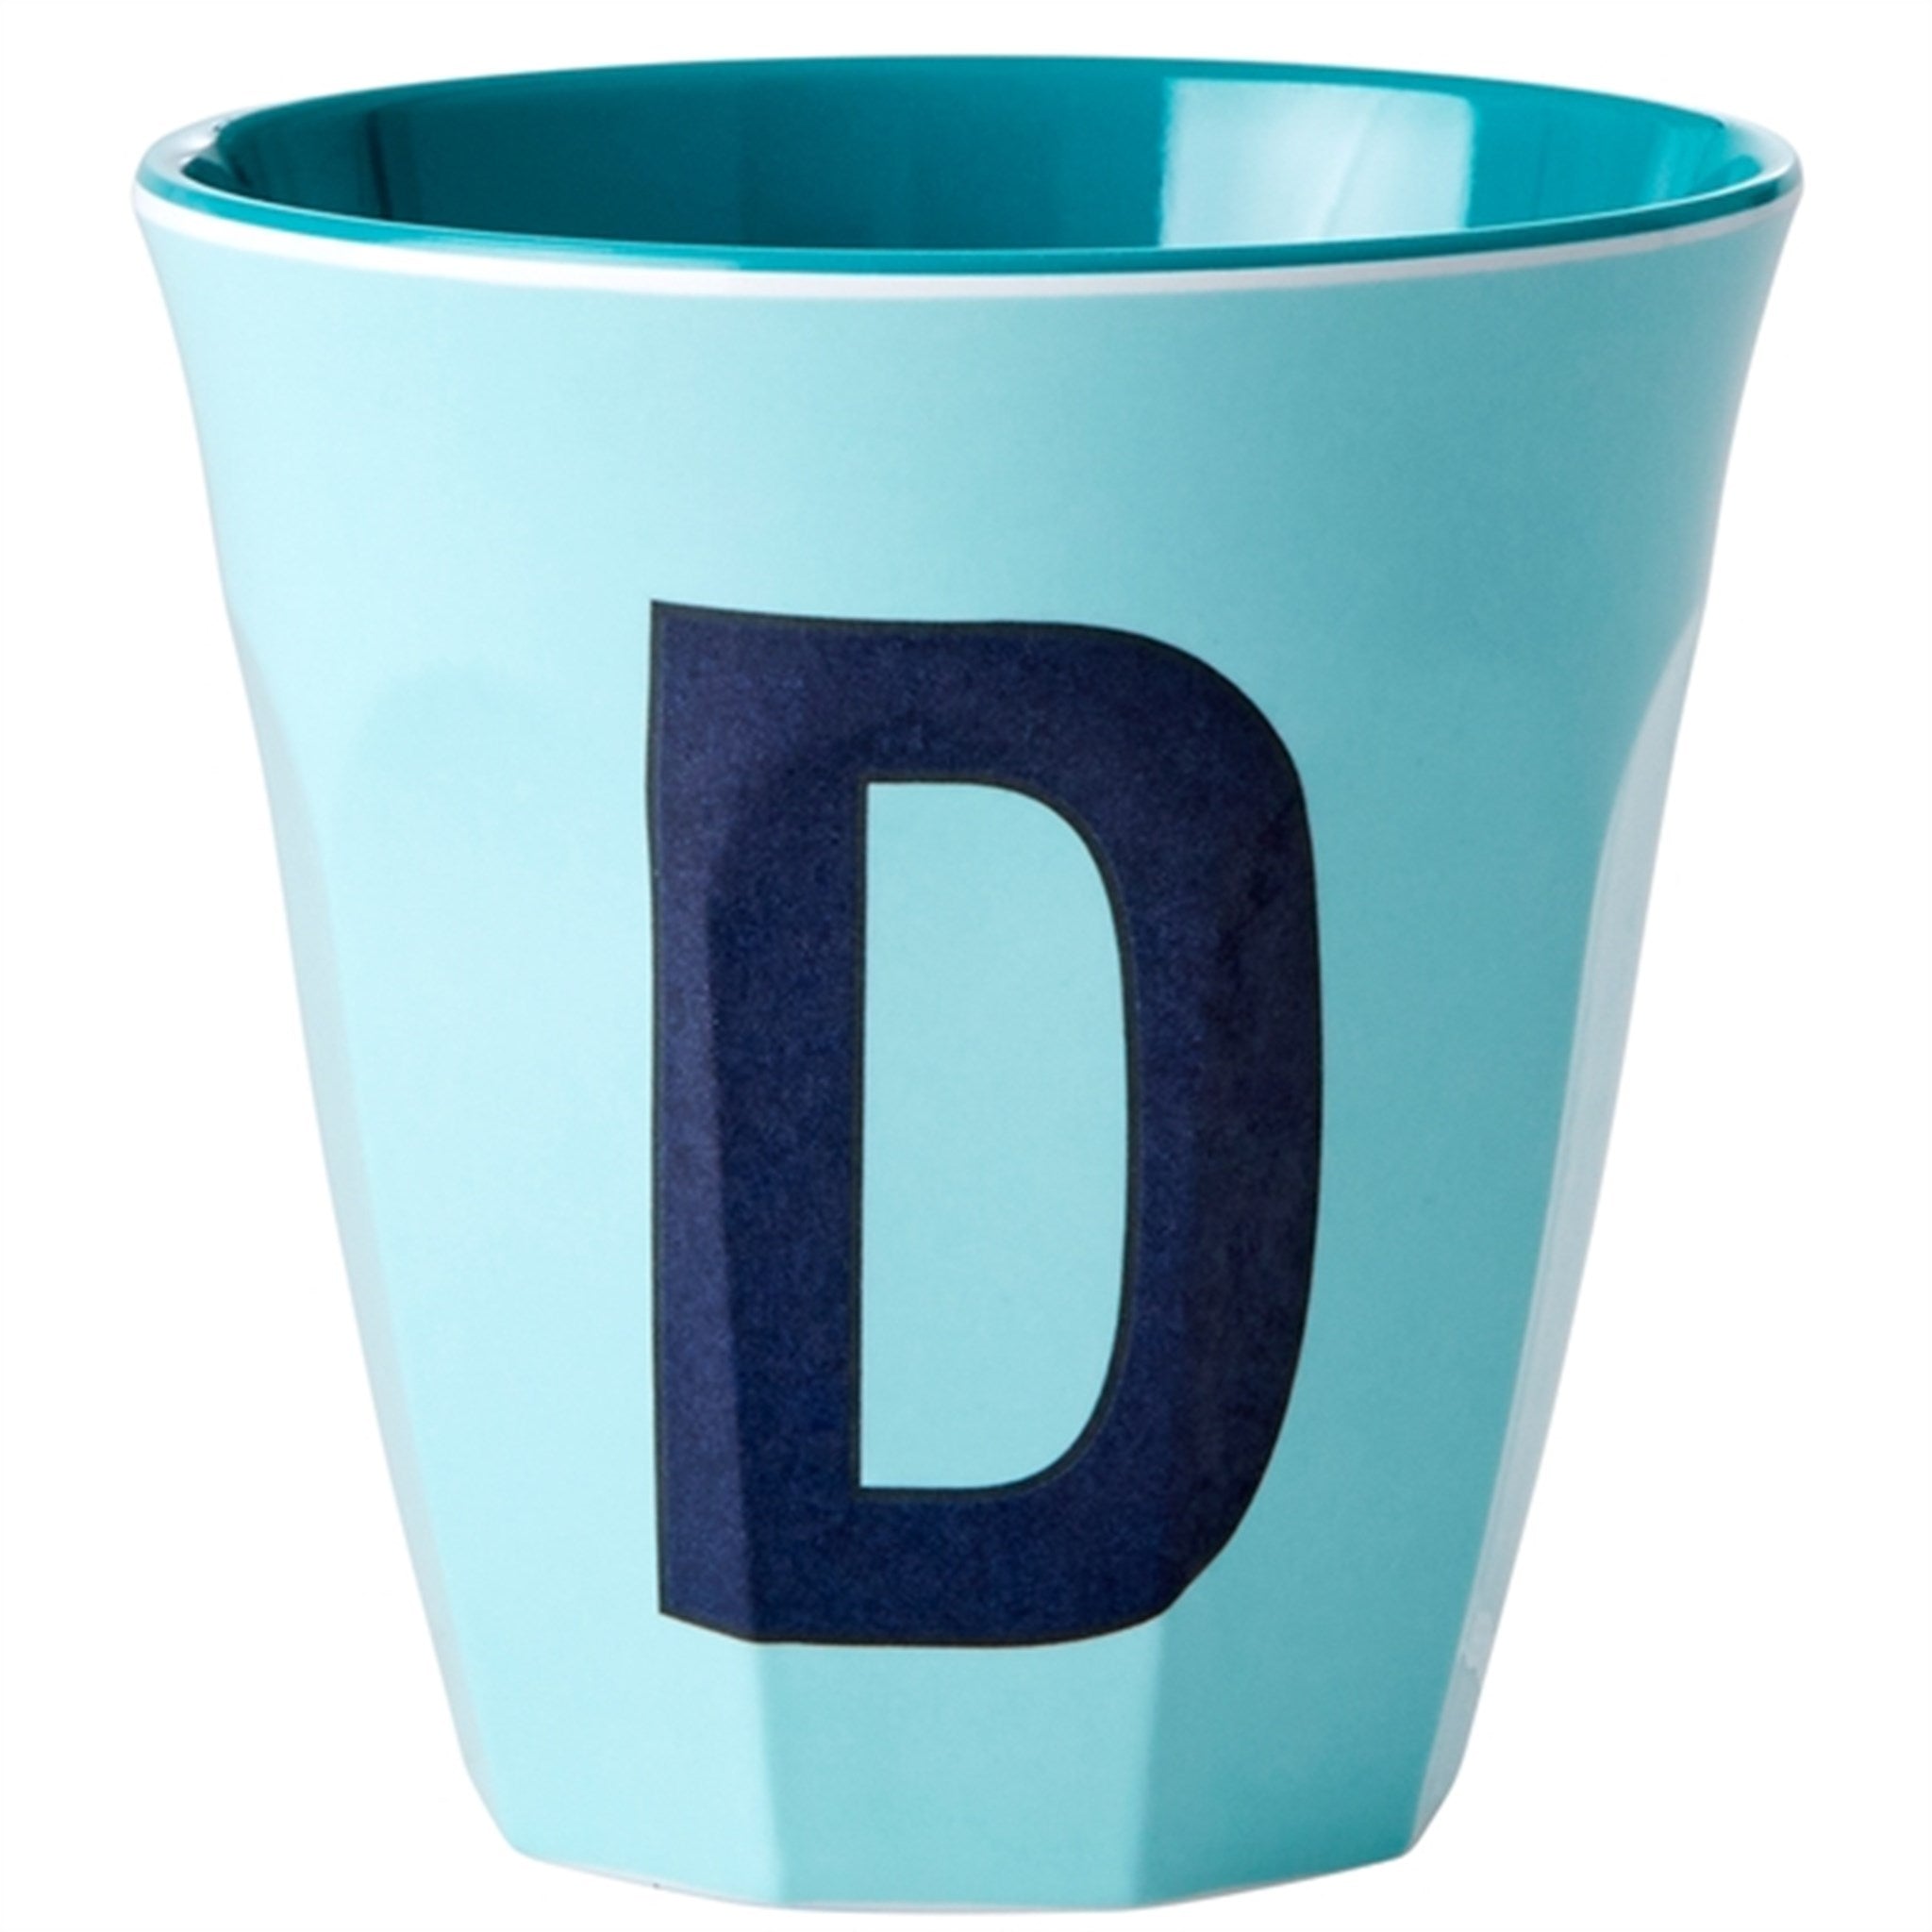 RICE Bluish Colors Melamin Alphabet Cup 4